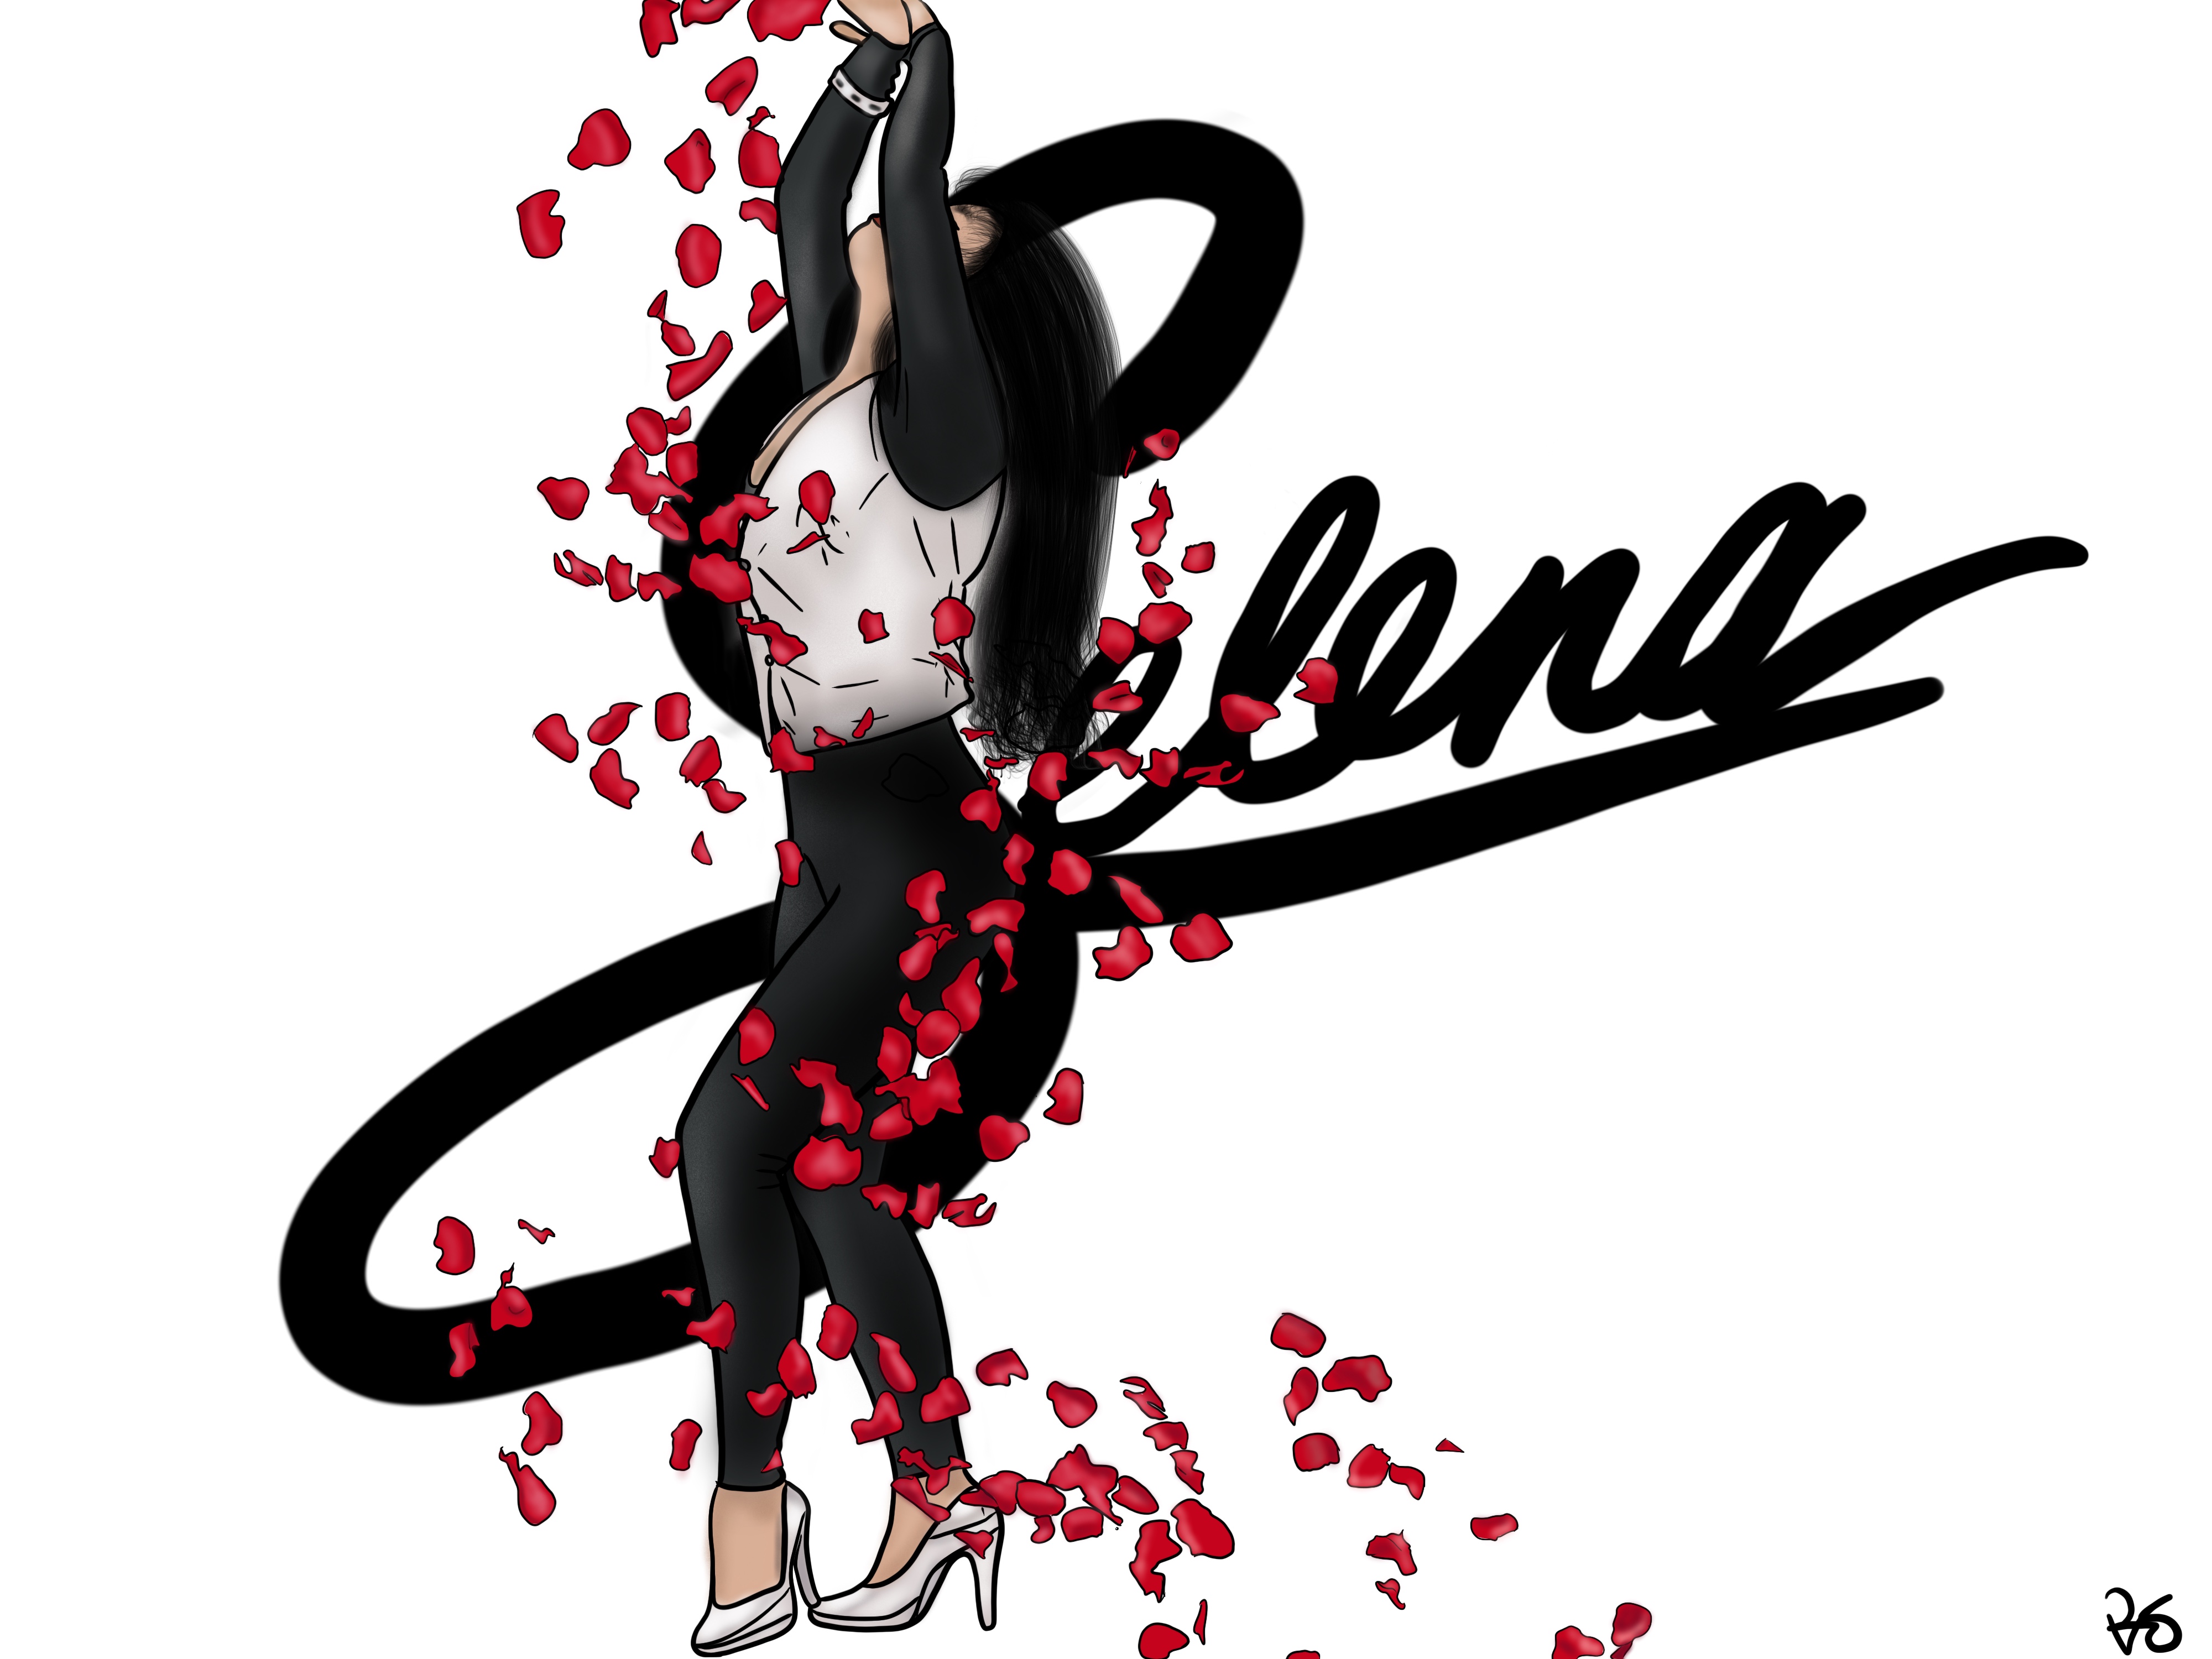 Selena: Como La Flor